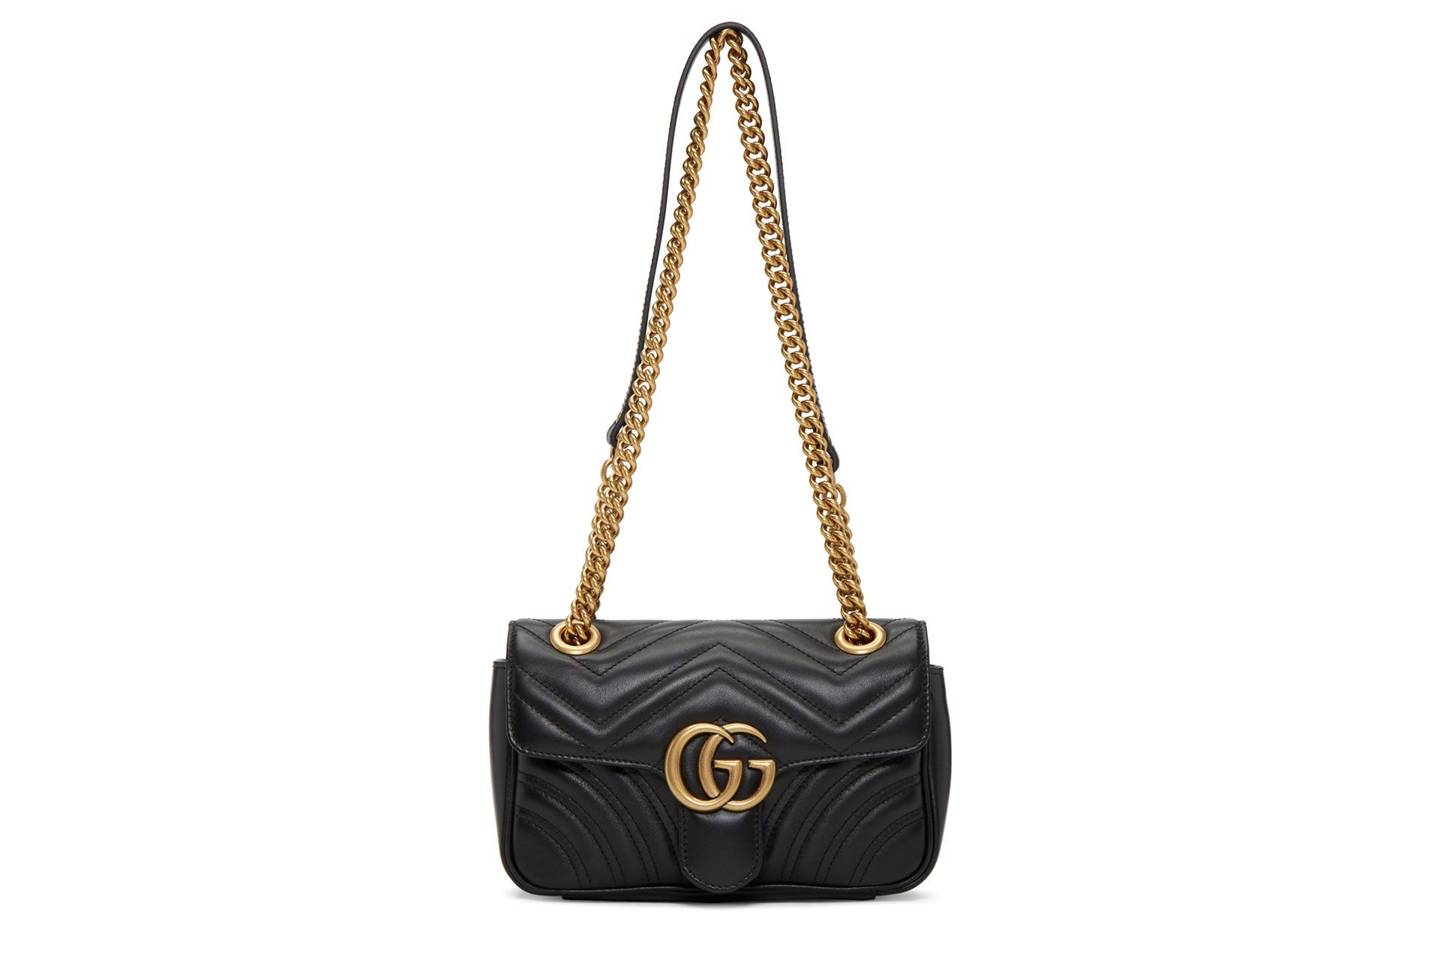 Designer handbags to invest in: Chanel, Chloe, Gucci & Valentino ...